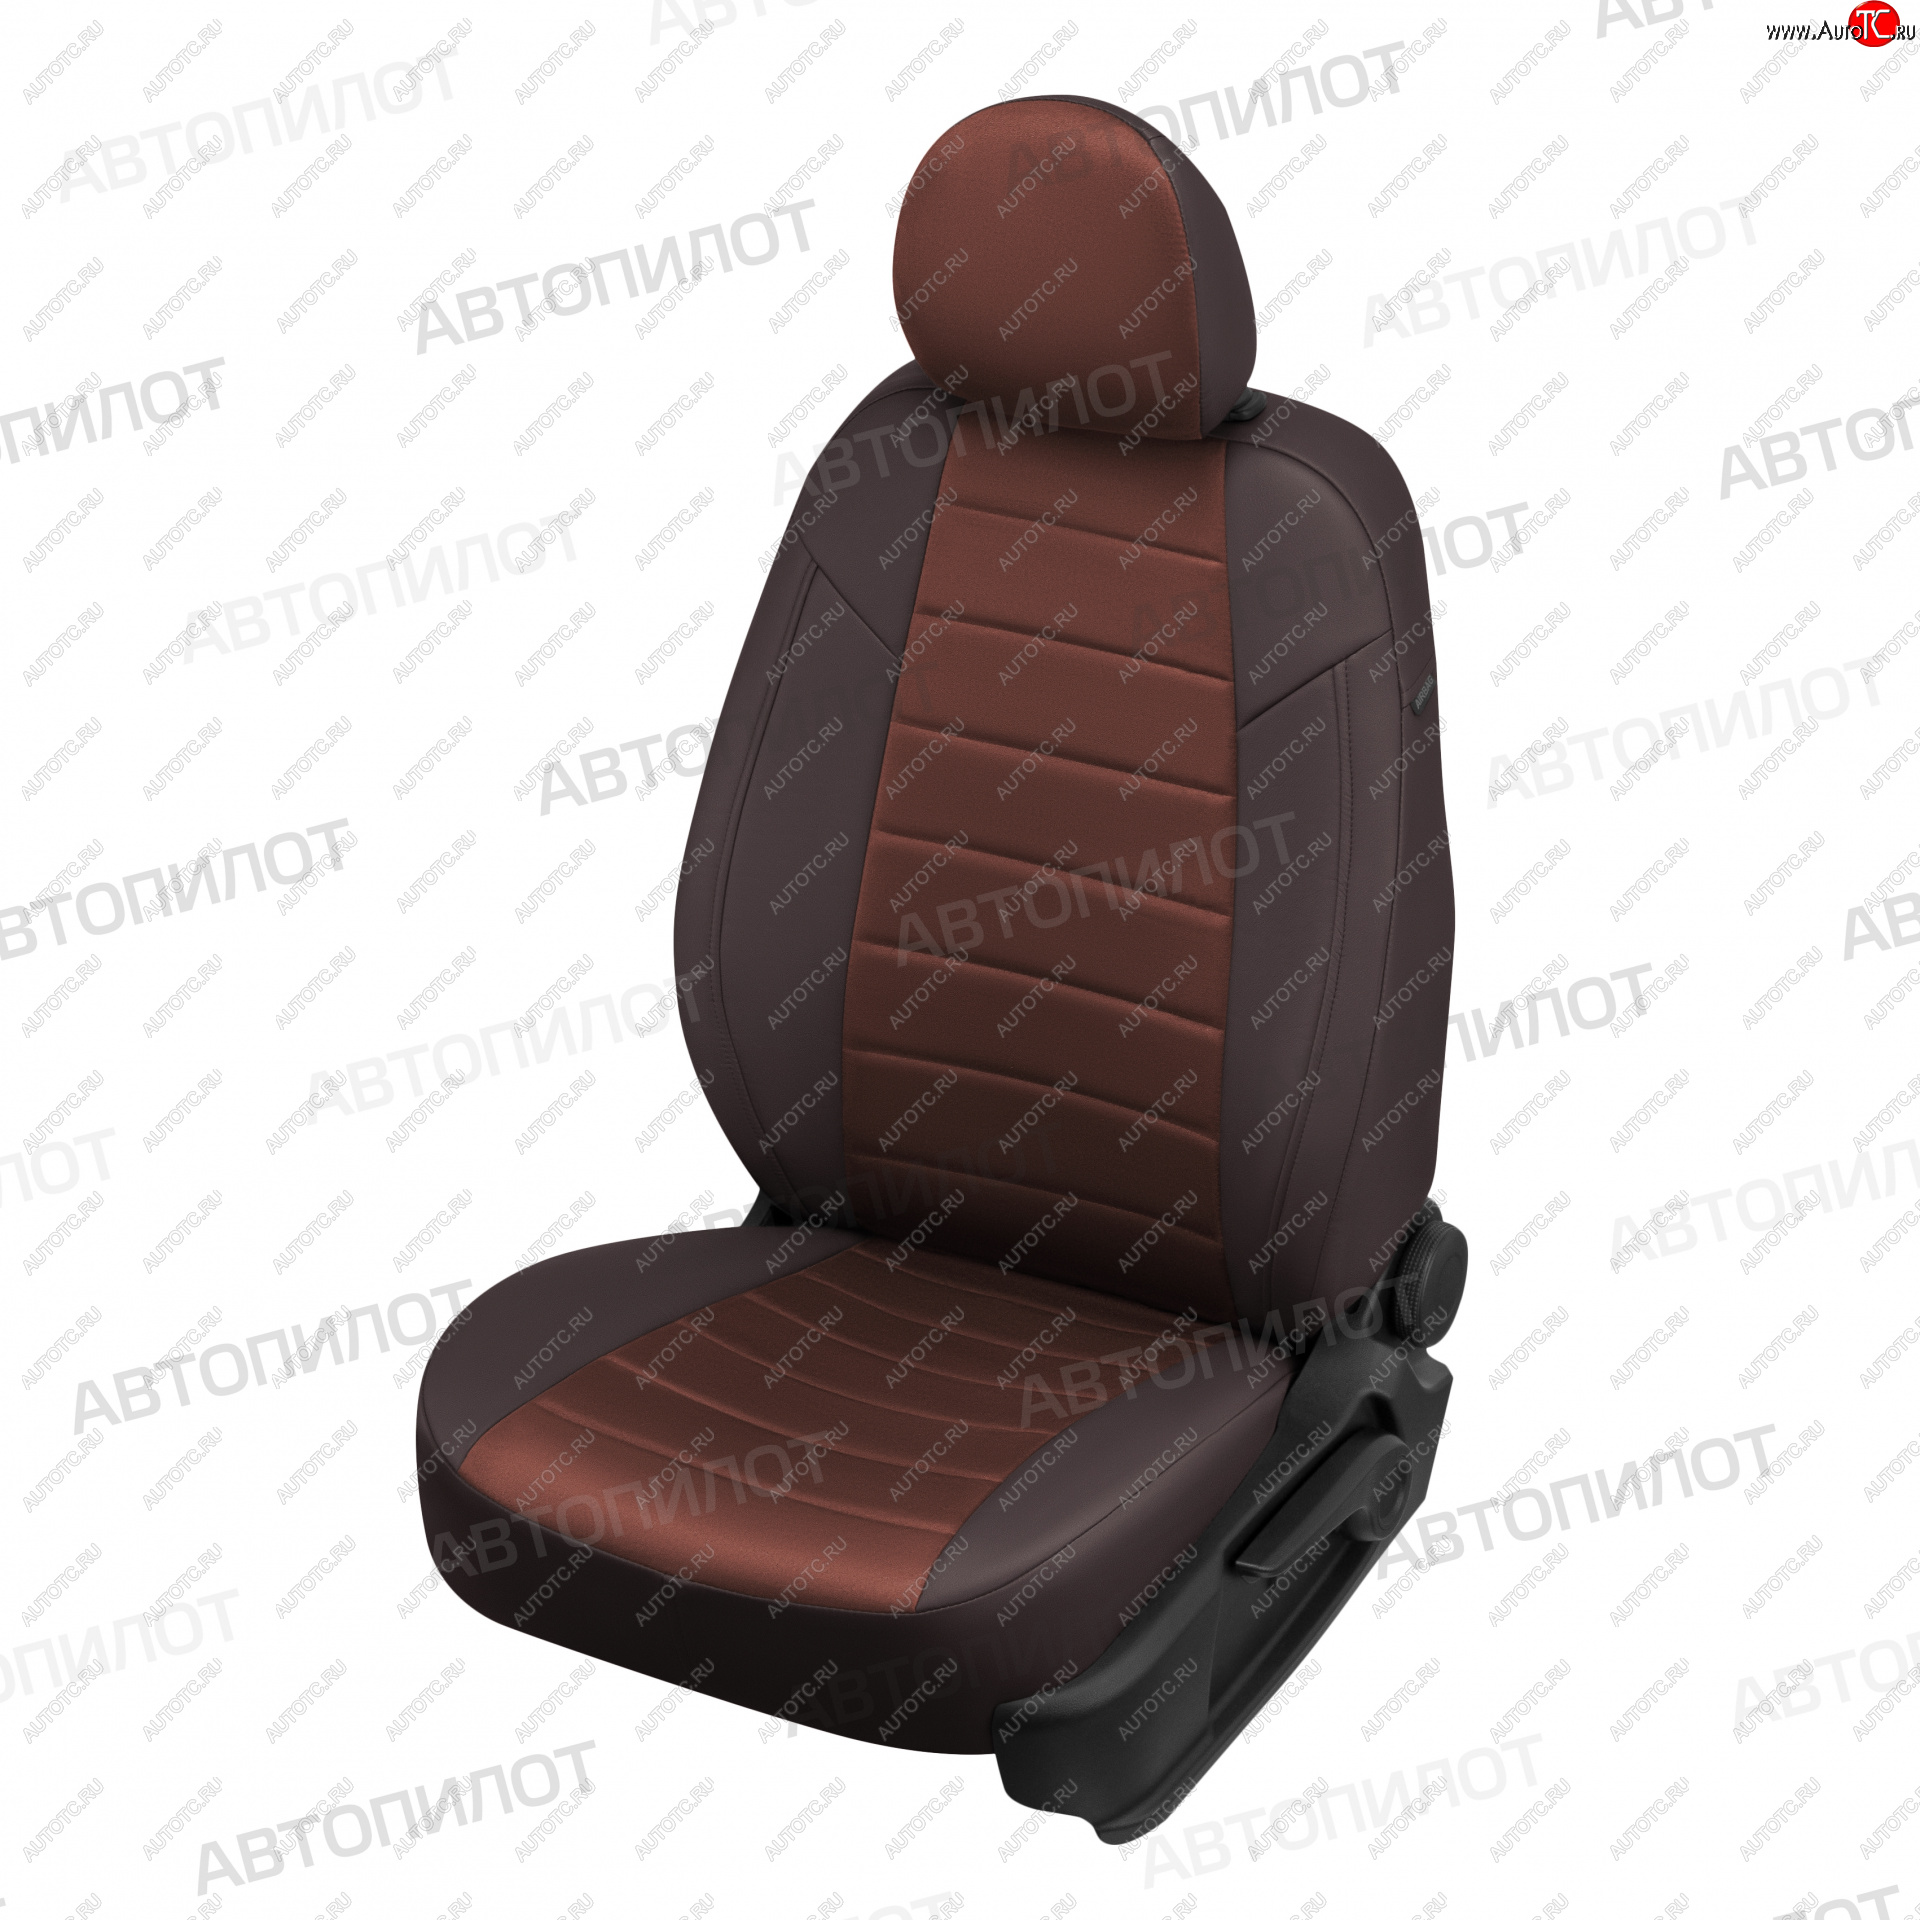 13 449 р. Чехлы сидений (экокожа/алькантара) Автопилот  Chevrolet Rezzo (2000-2008) (шоколад)